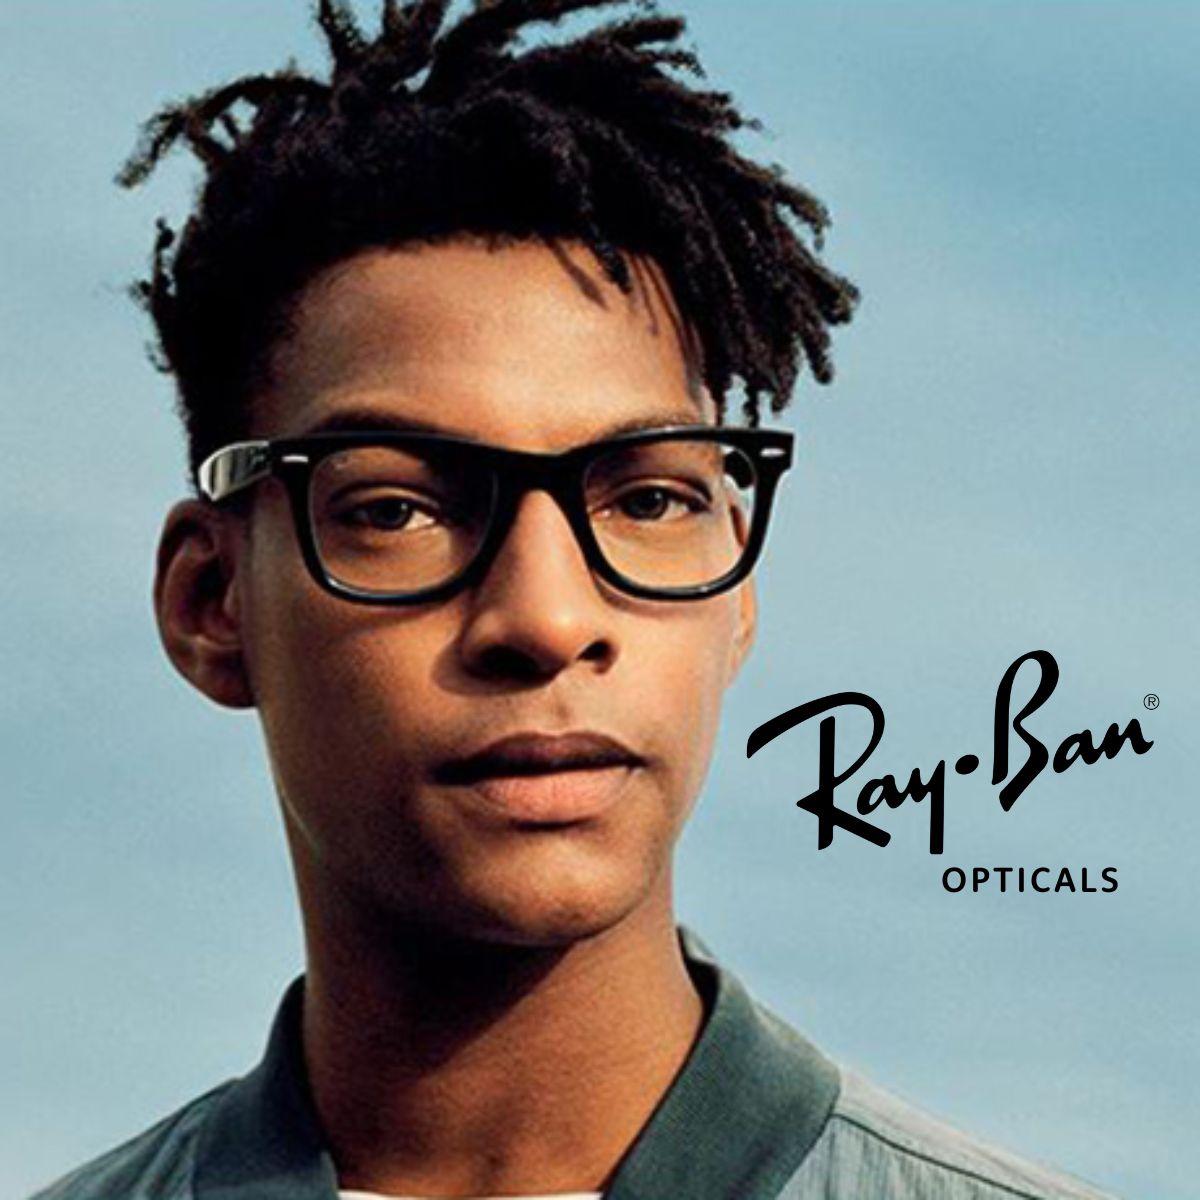 "Buy Stylish Glasses Frames | Ray-Ban Opticals Eyewear - Optorium"